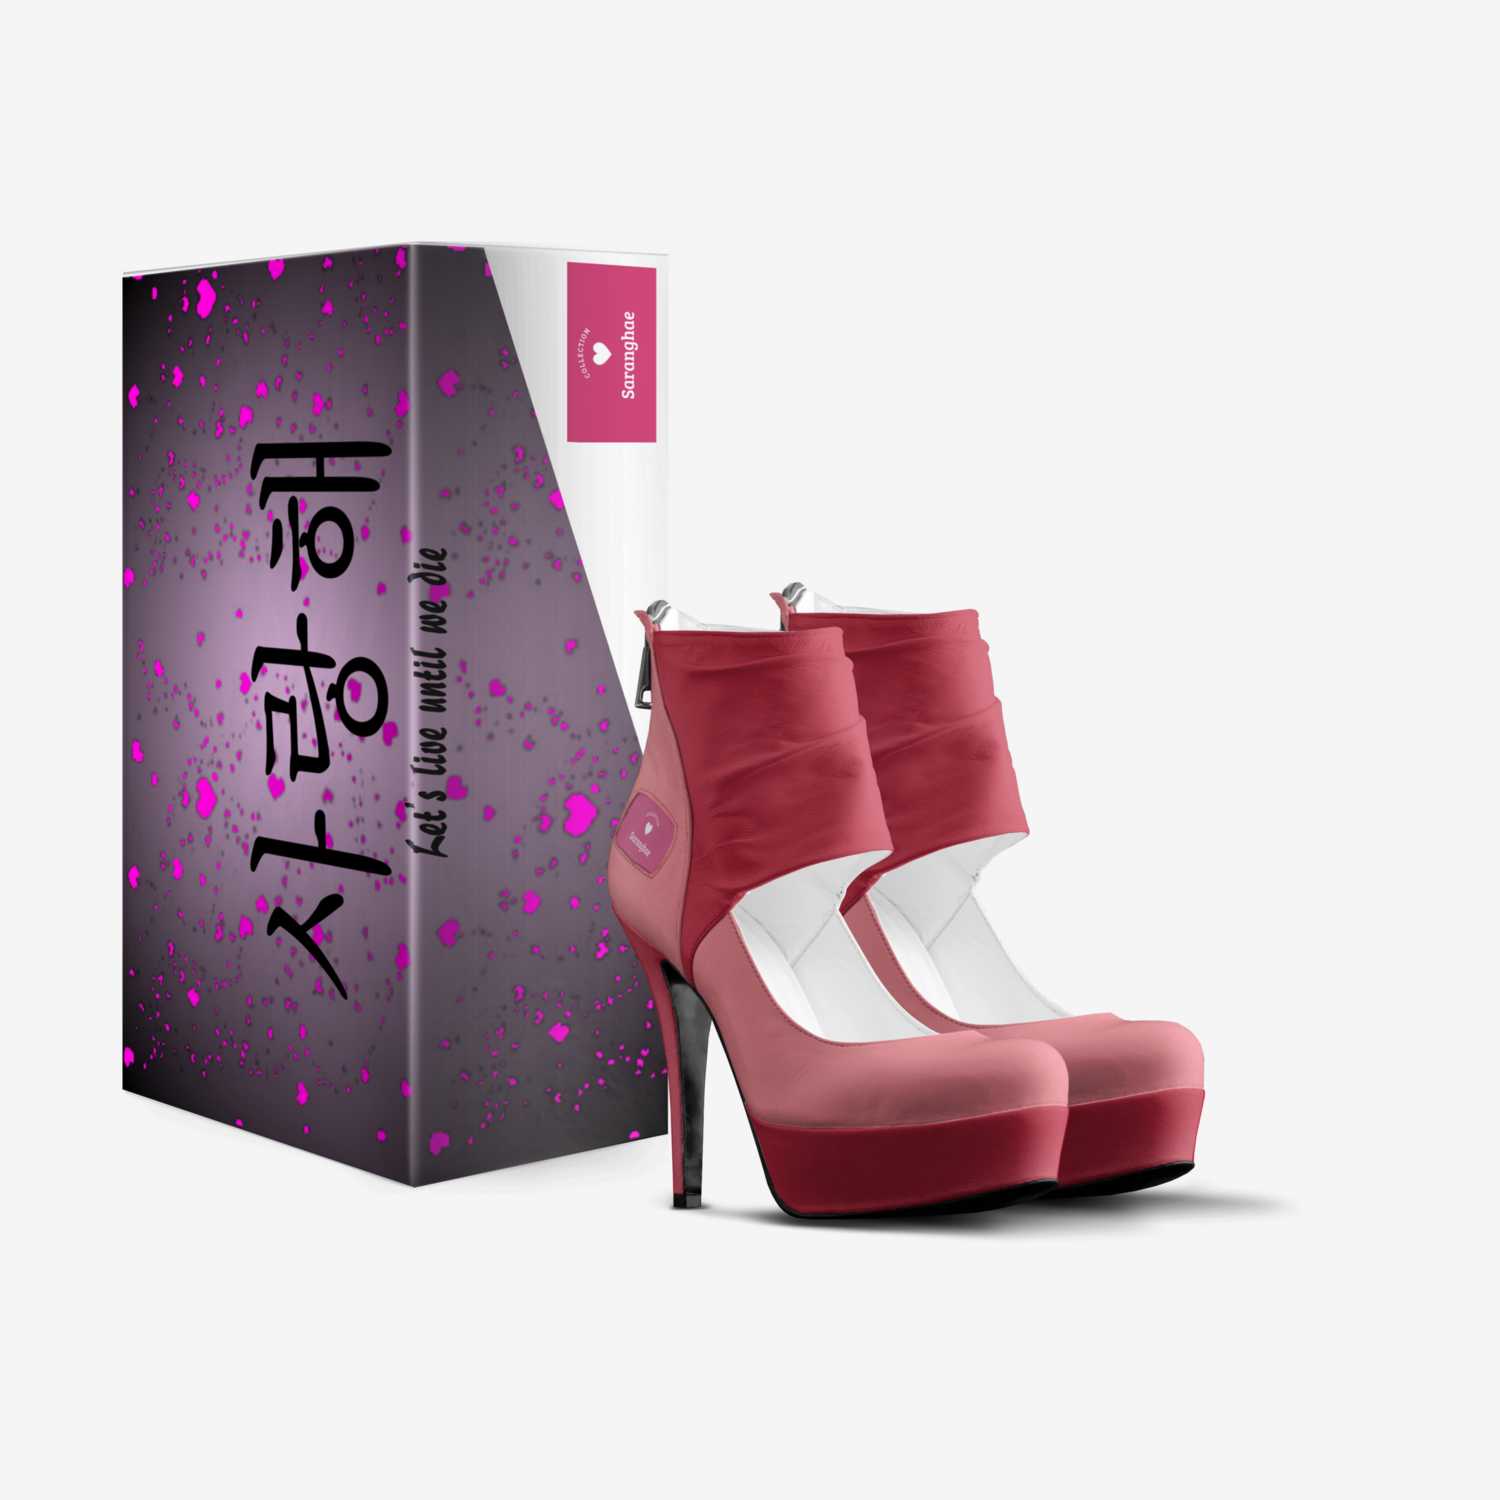 Saranghae custom made in Italy shoes by Aomoji Kei | Box view